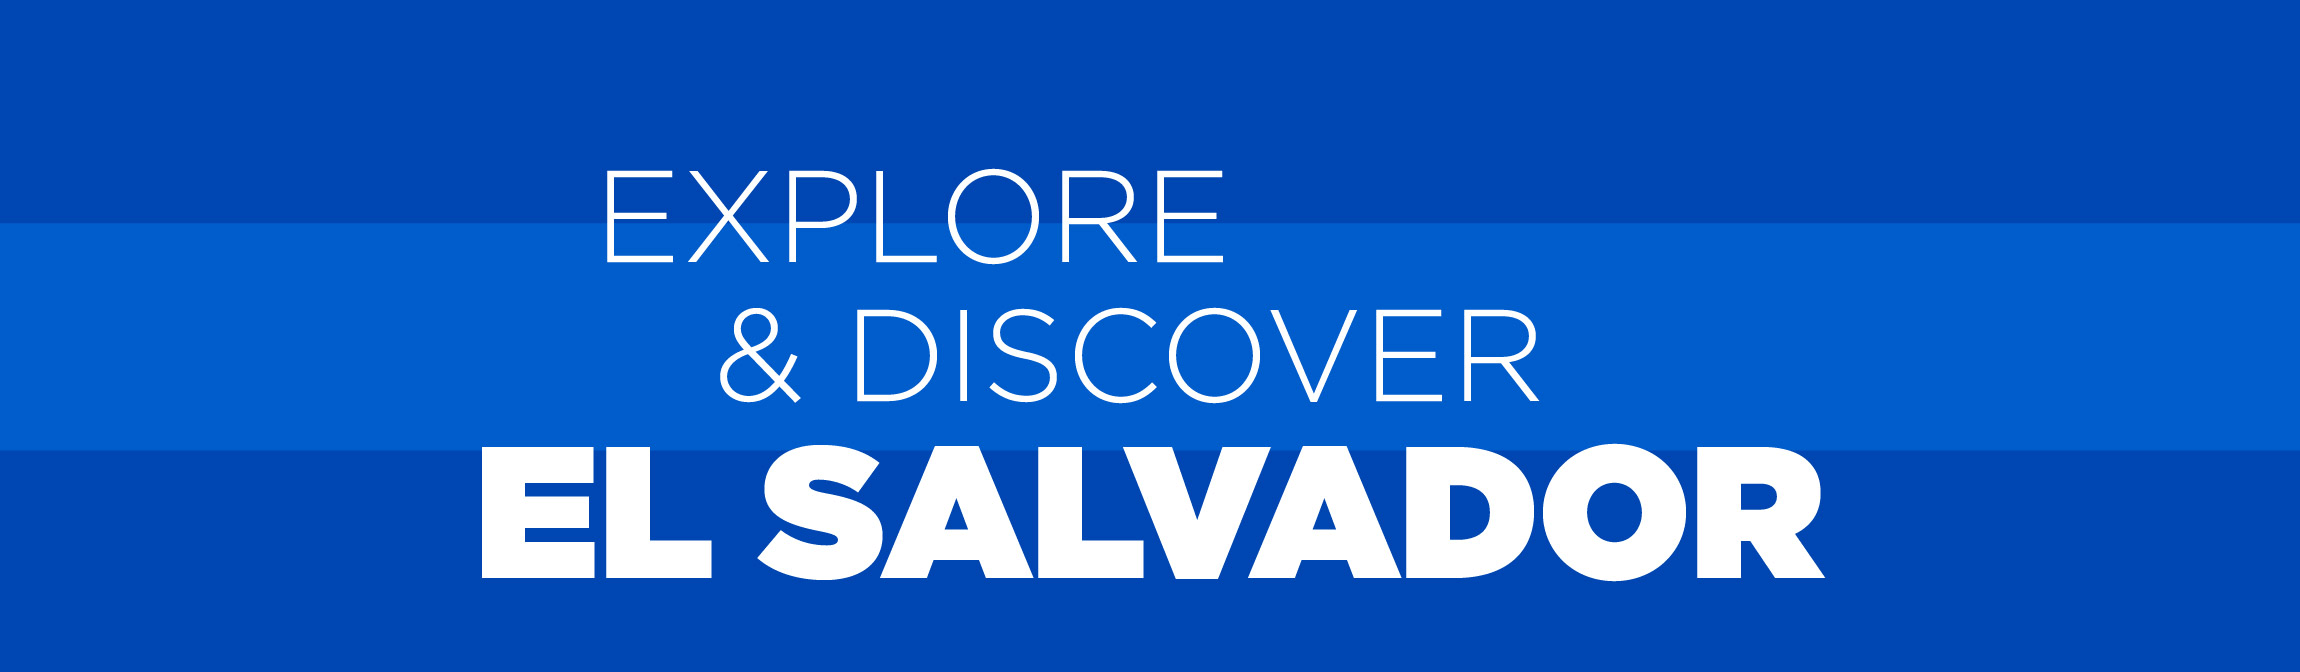 Explore-&-Discover-El-Salvador-logo